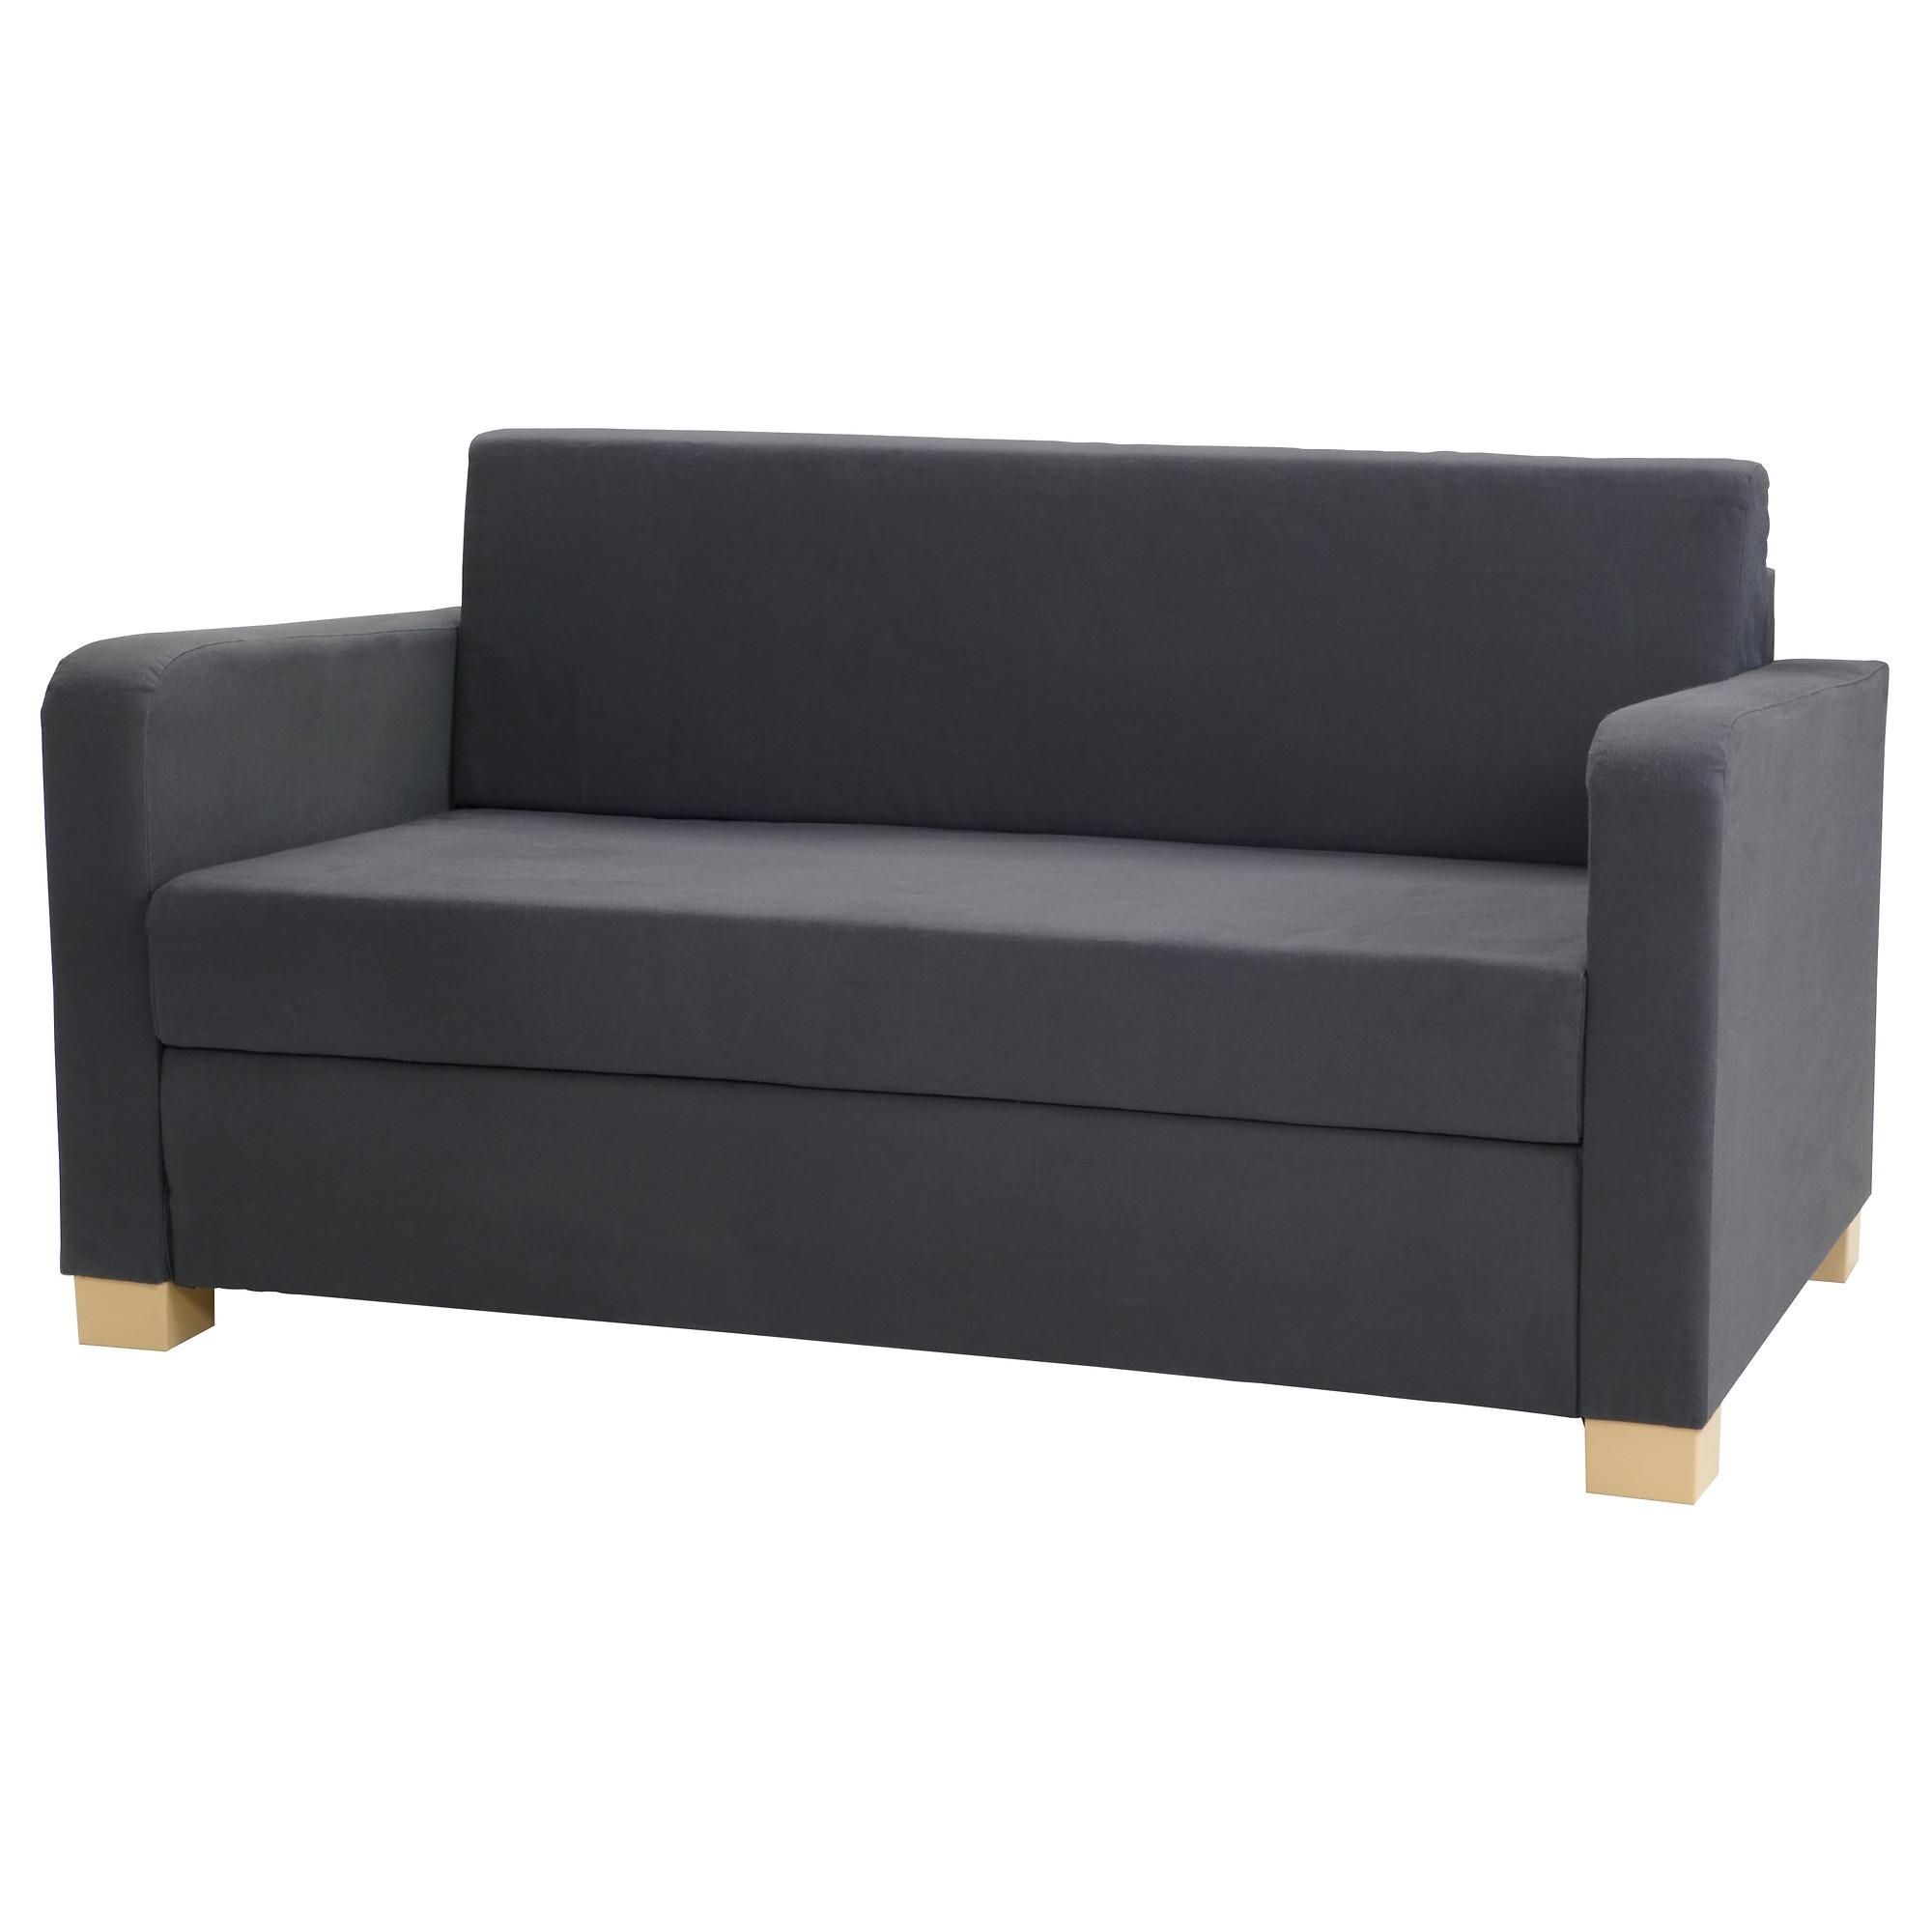 Sofa Beds & Futons – Ikea With Regard To Ikea Sleeper Sofa Sectional (View 8 of 20)